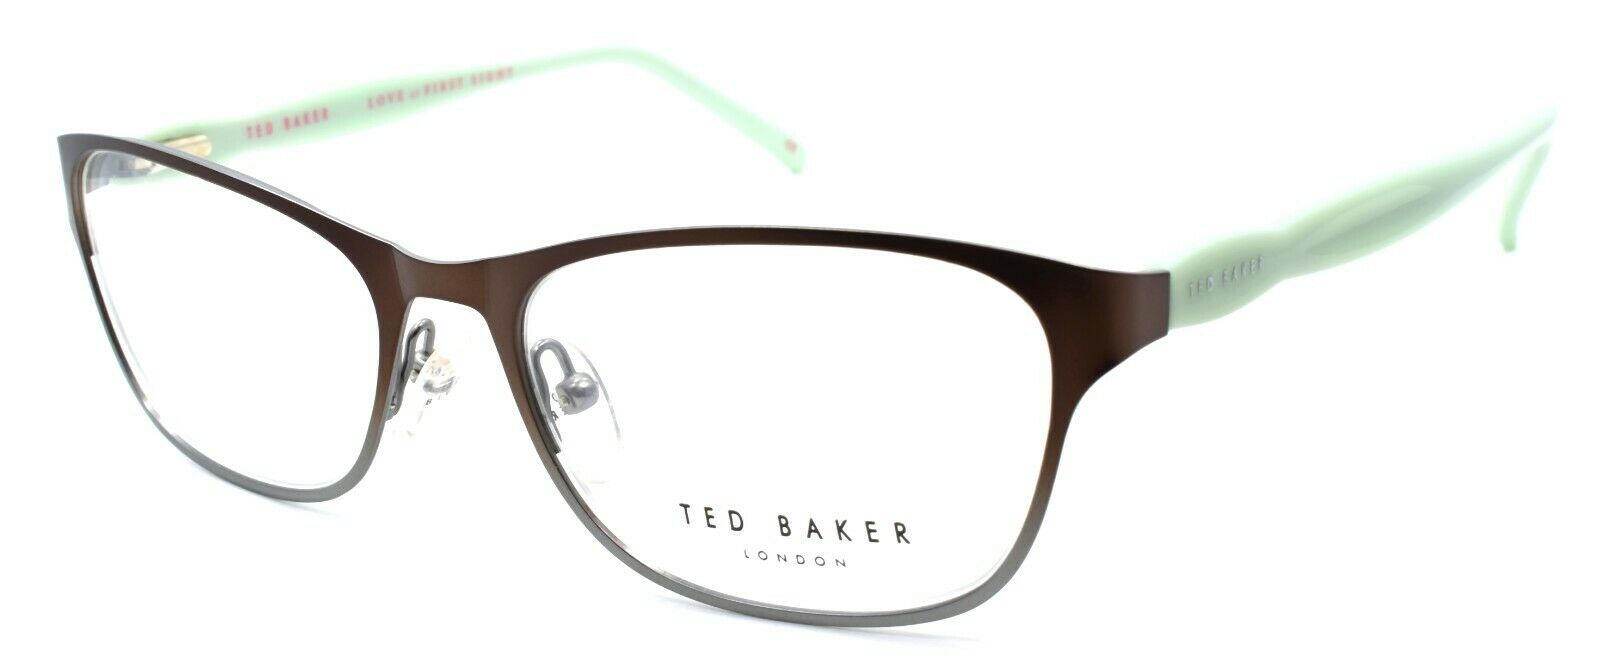 1-Ted Baker Rigger 2213 194 Women's Eyeglasses Frames 51-17-135 Brown / Mint-4894327075836-IKSpecs